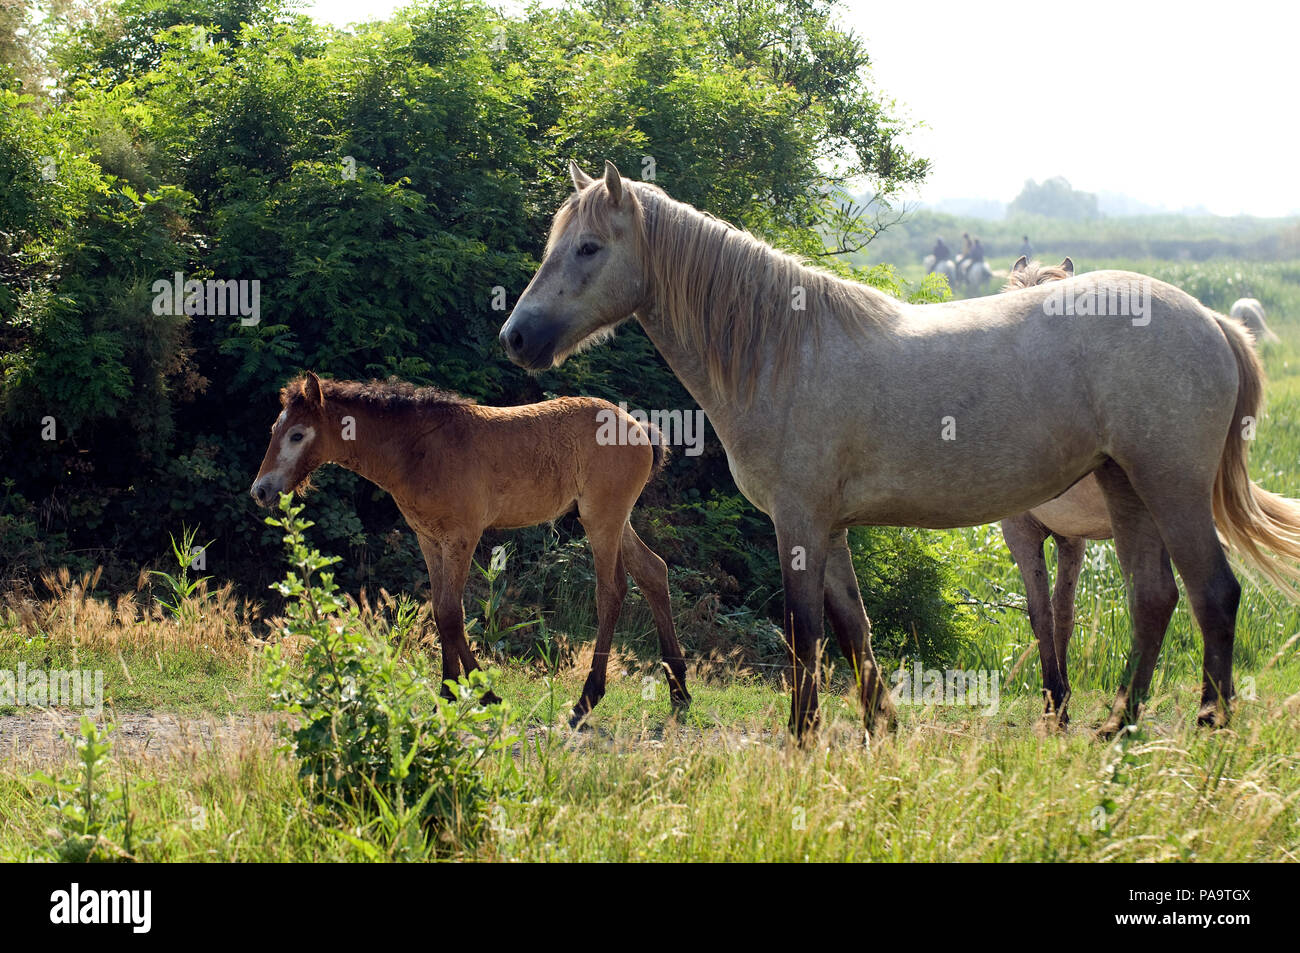 Cheval Camargue - poulain et jument - Cavallo selvaggio della Camargue - puledro e mare - Equus caballus Foto Stock